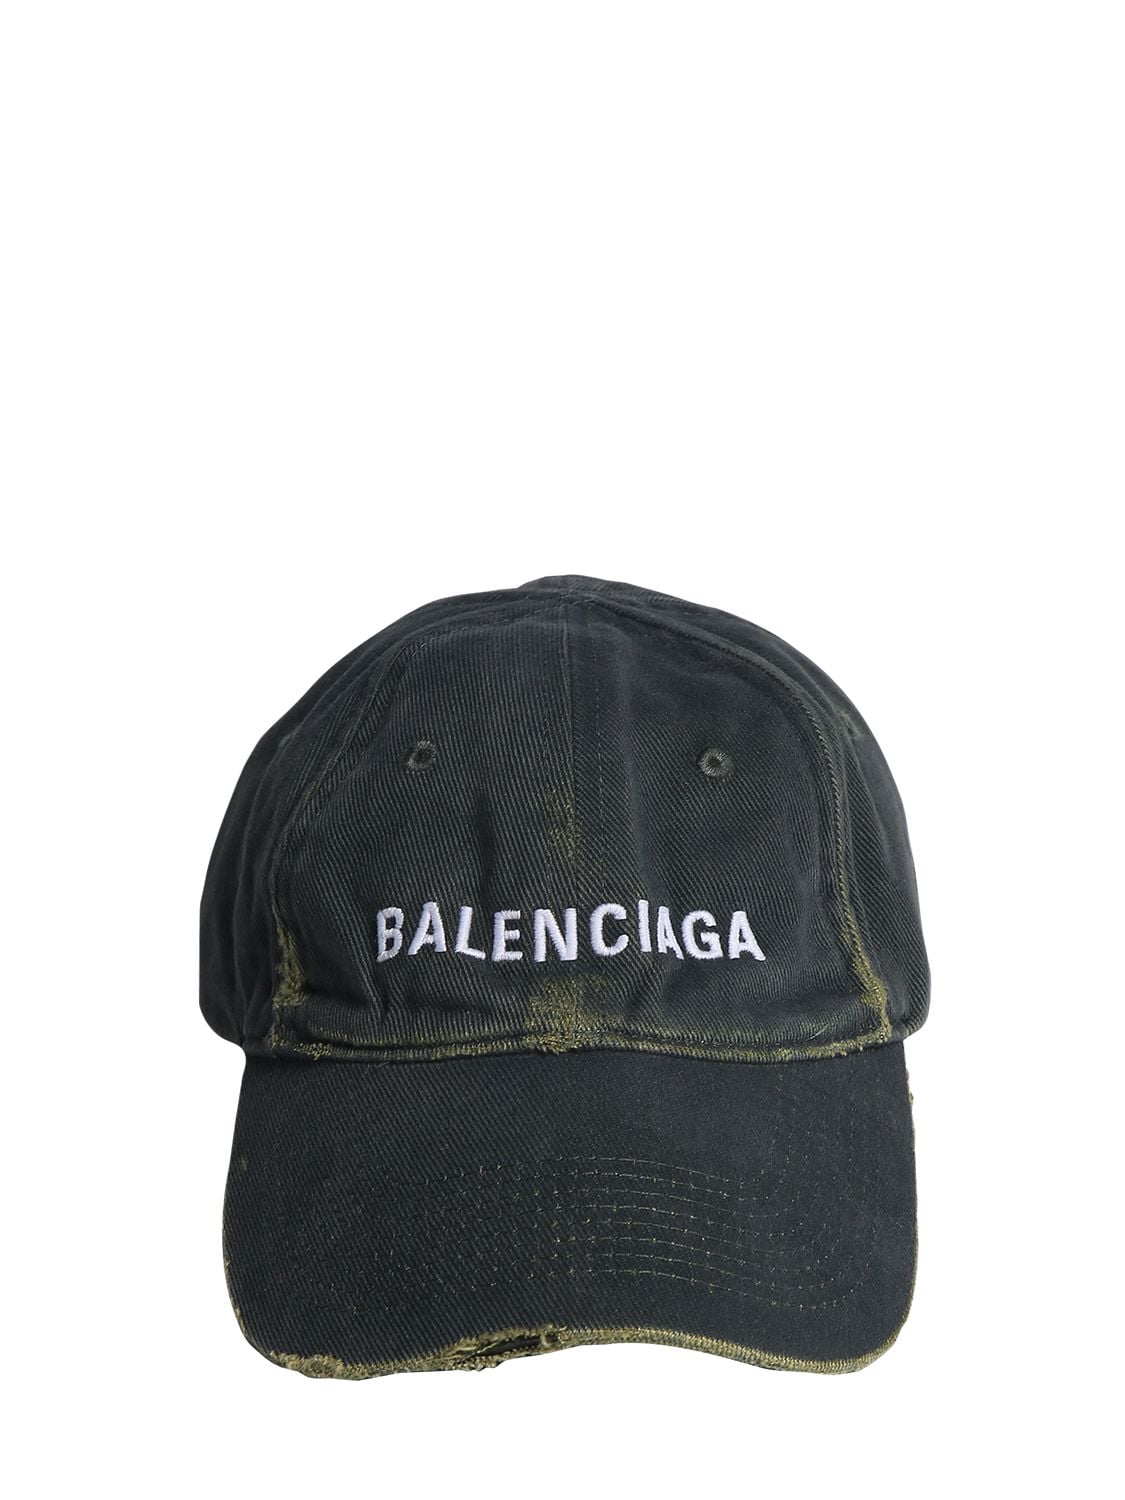 BALENCIAGA 复古棉质牛仔棒球帽,73IWD2040-MZA3NW2